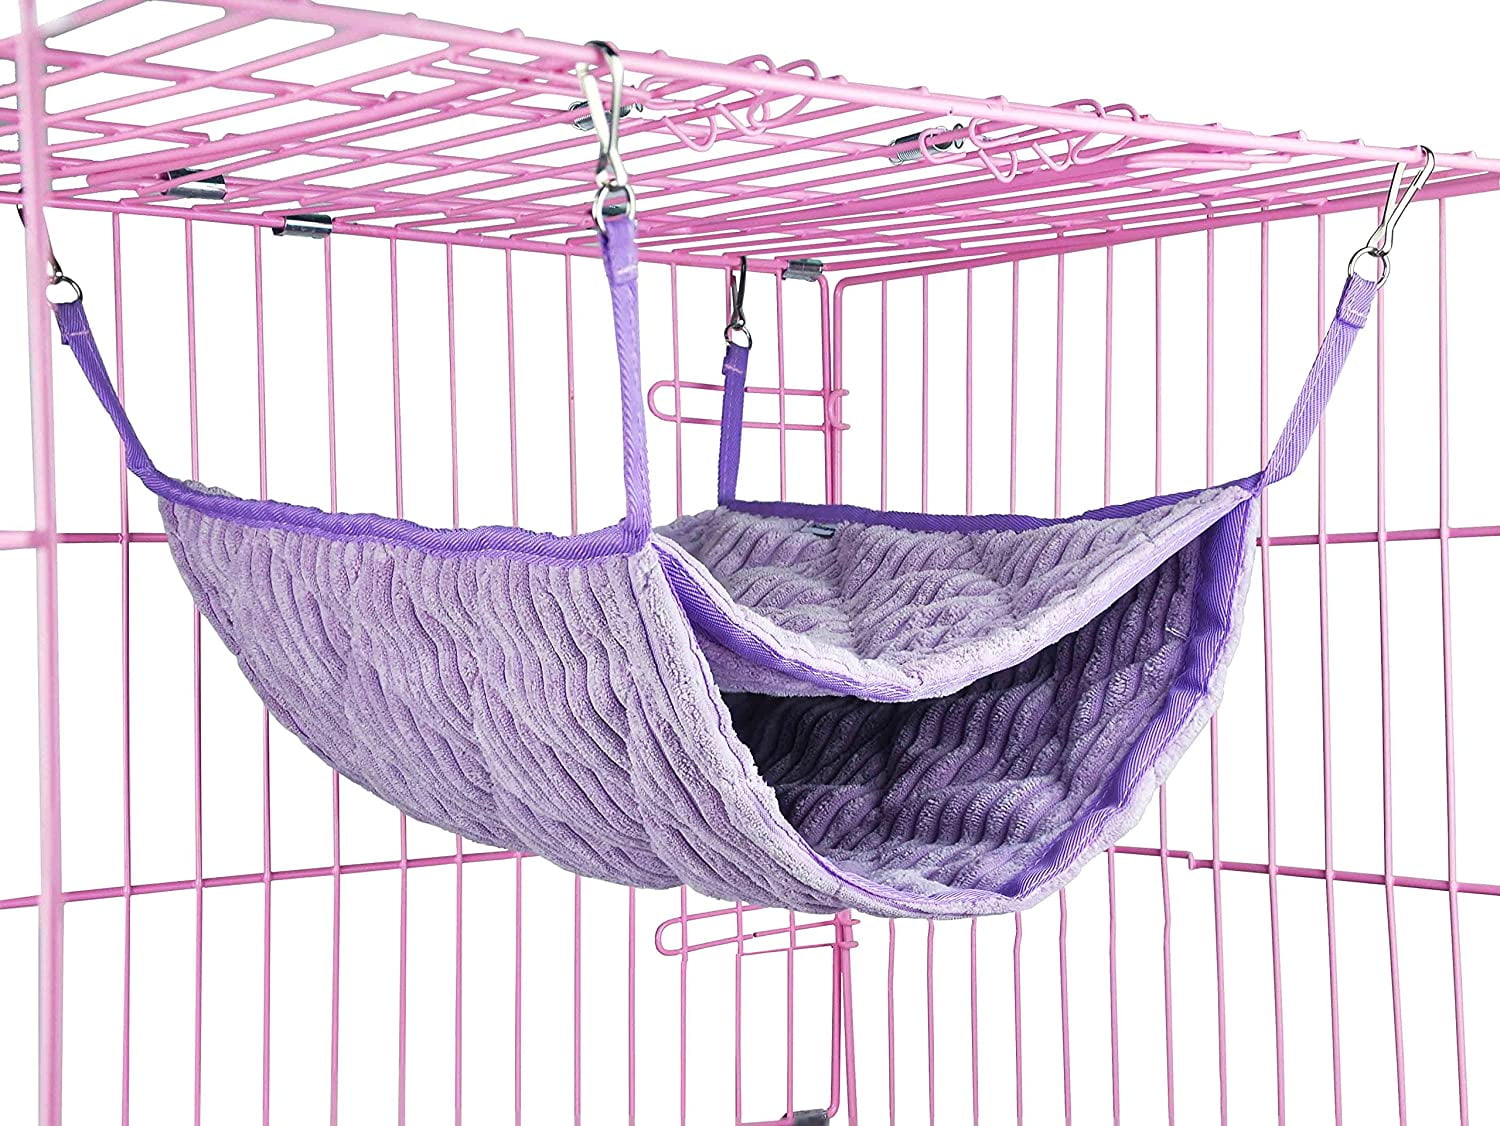 Niteangel Hanging Hammock Nap Sack Swing Bag Pet Sleeper for Ferret Rat Sugar Glider and Other Small Animals 